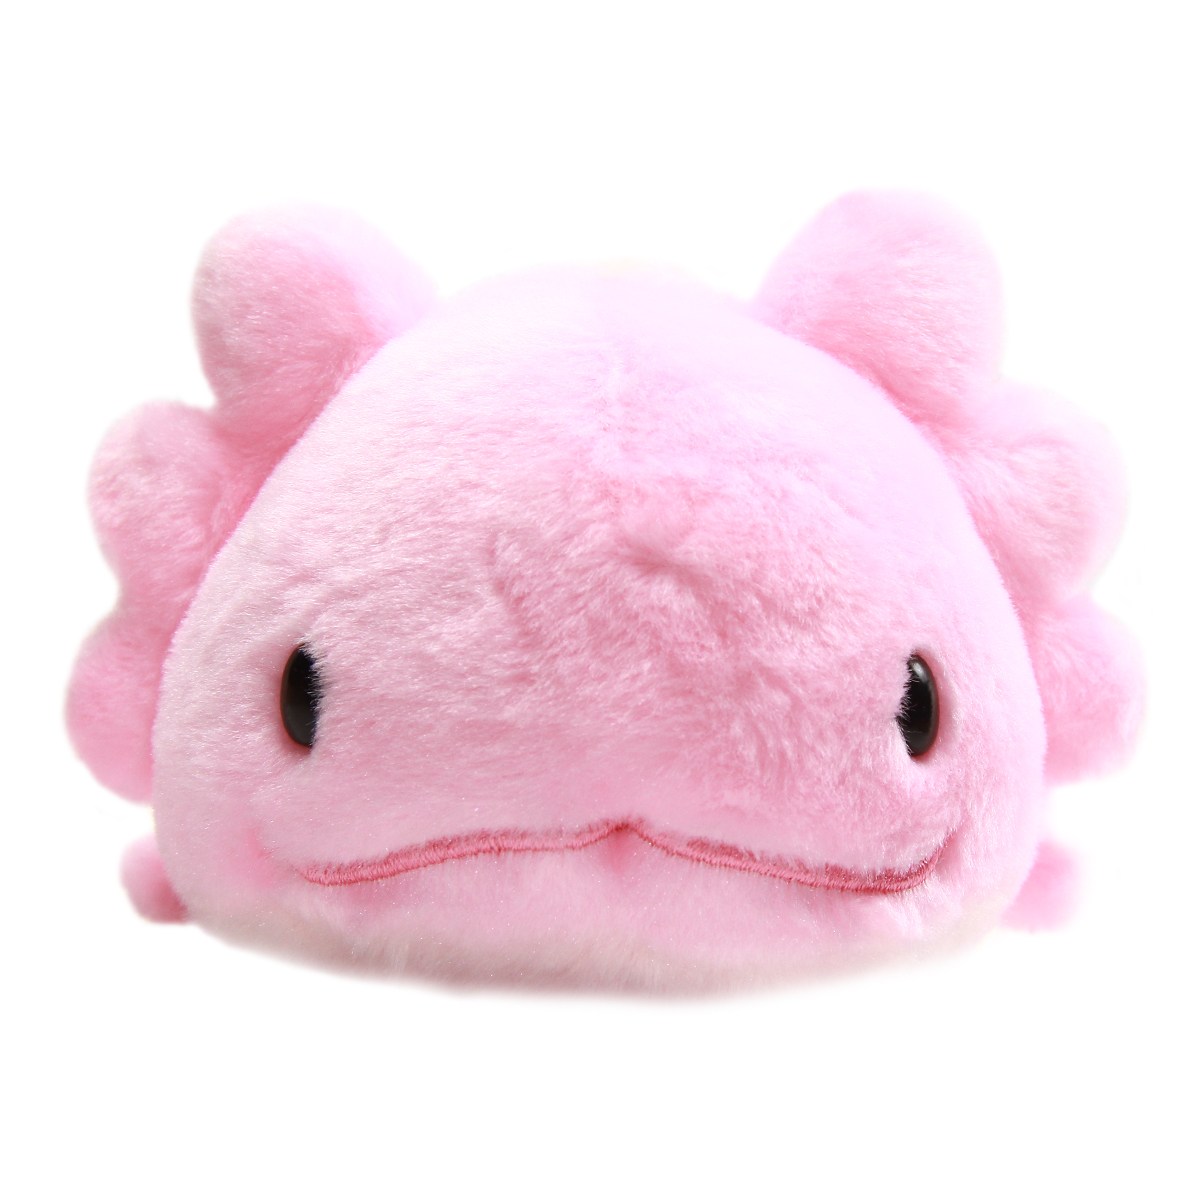 Axolotl Plushie Super Soft Squishy Stuffed Animal Toy Pink BIG Size 20 Inches